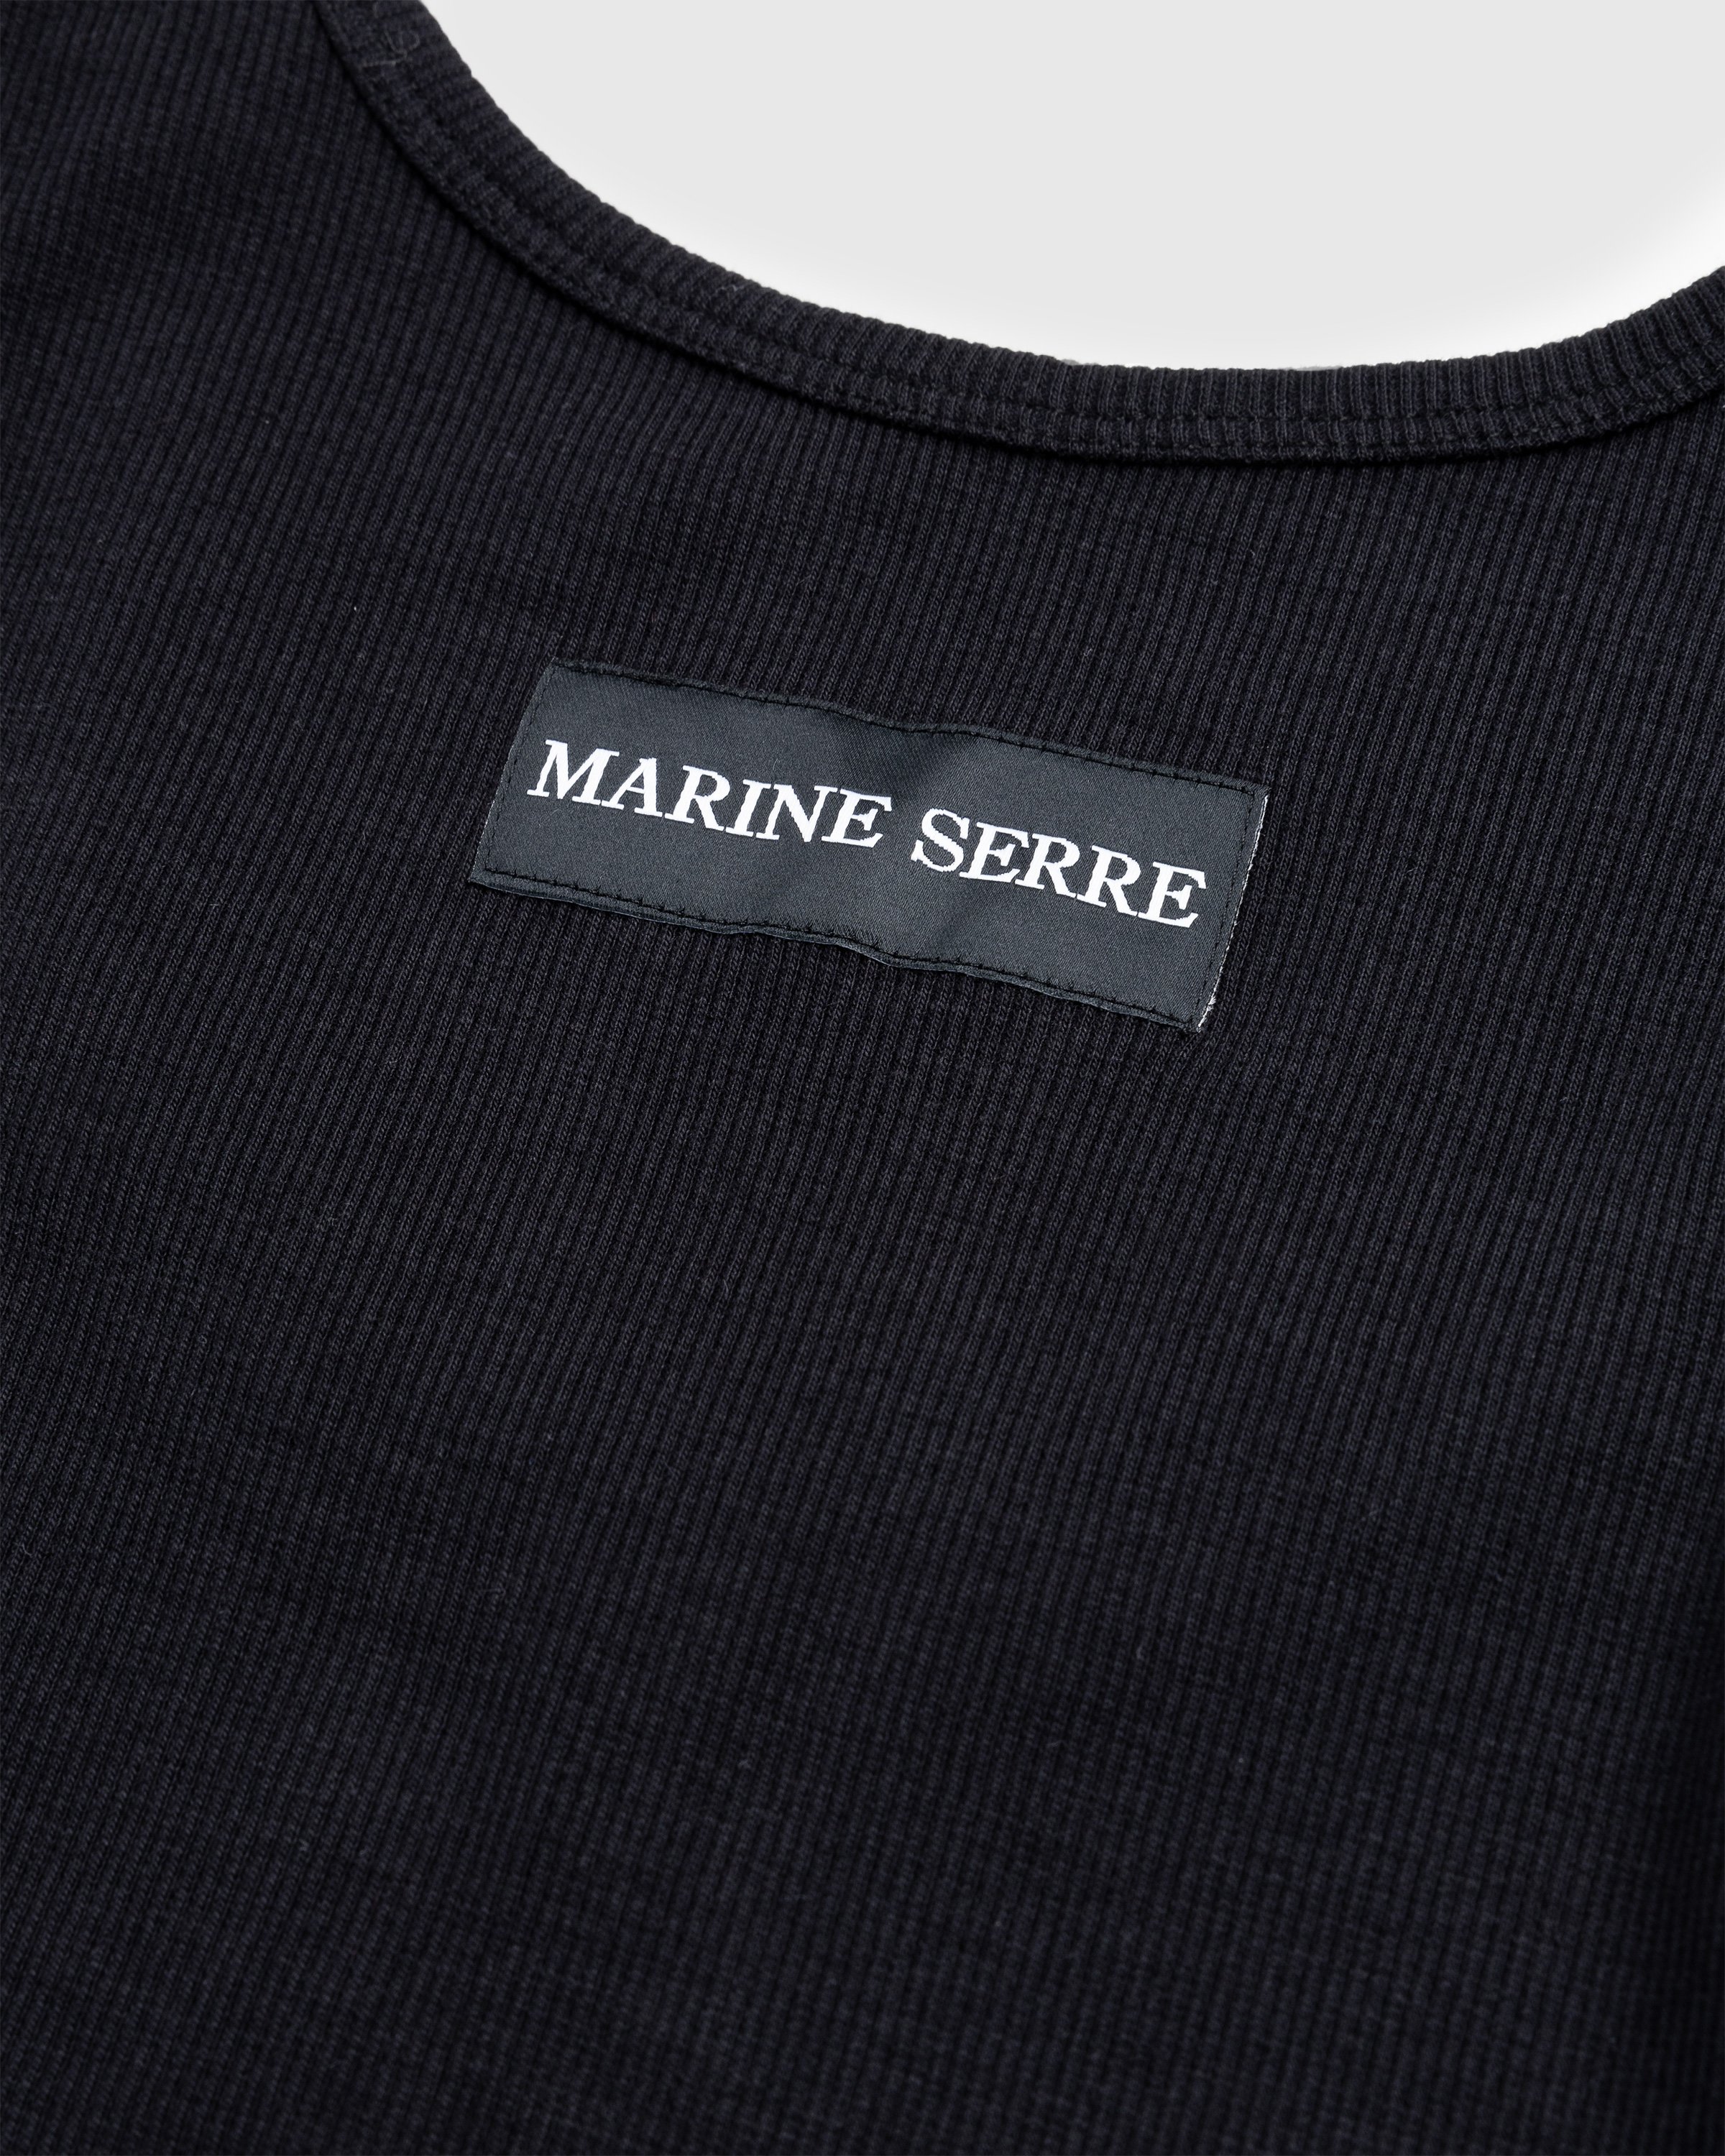 Marine Serre - Organic Cotton Rib Tank Top Black - Clothing - Black - Image 5